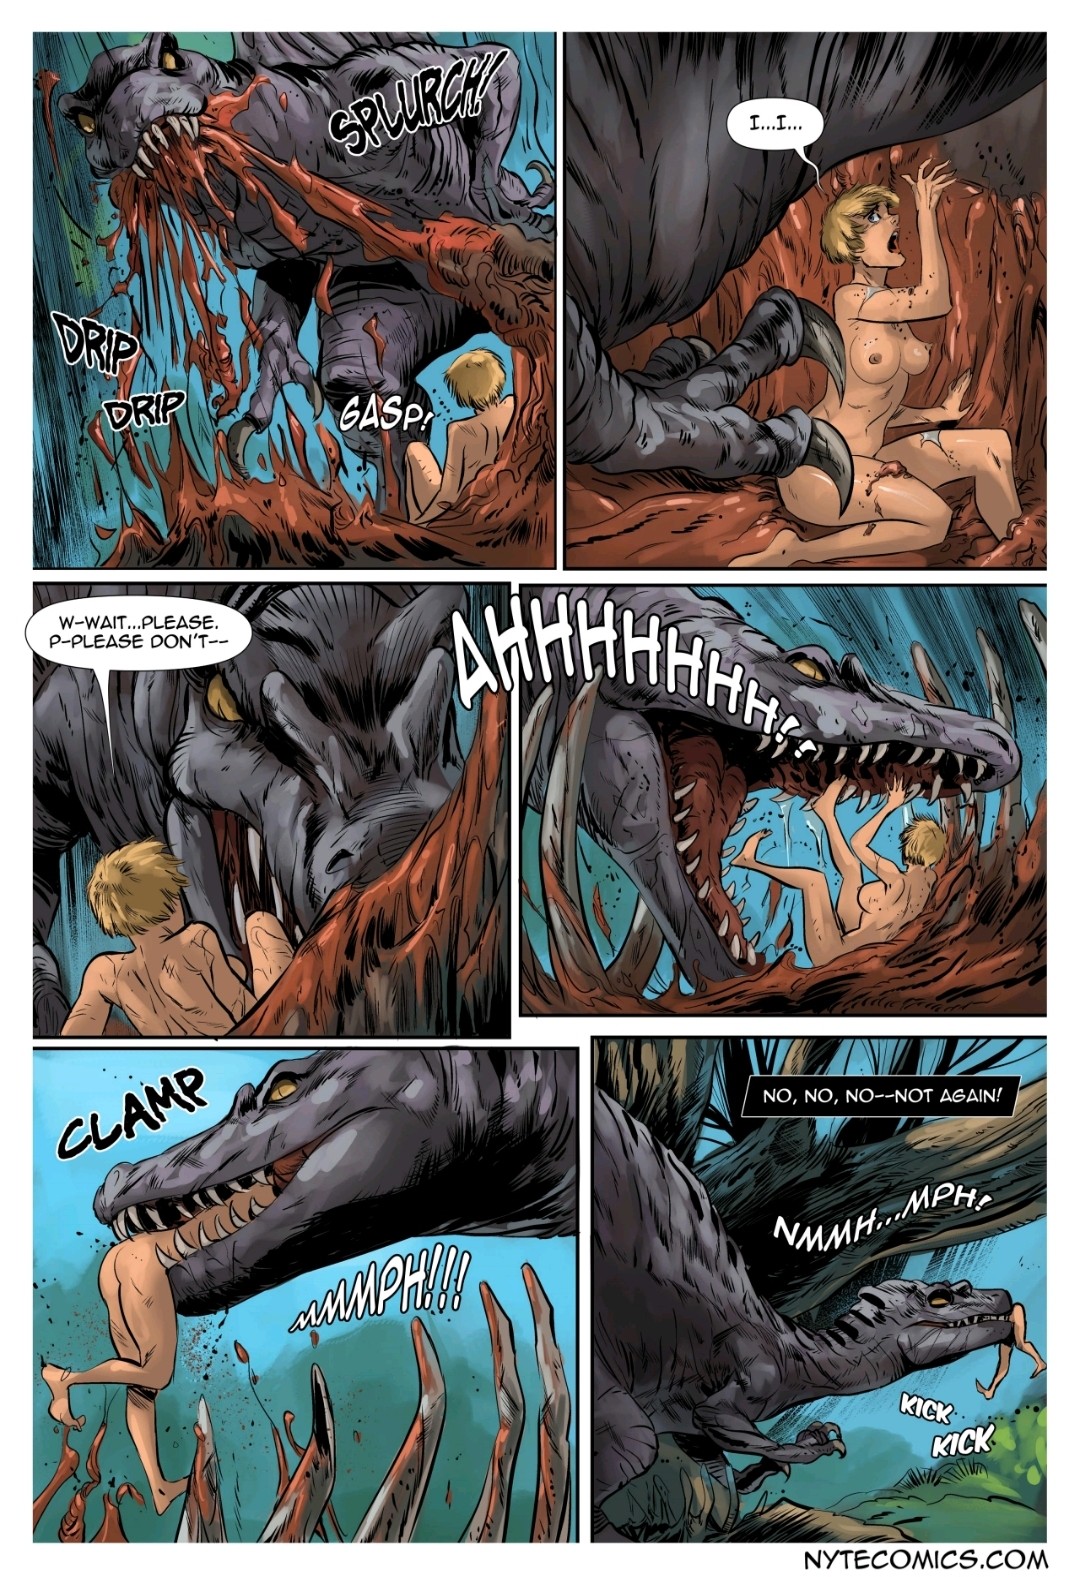 Jurassic porn comic